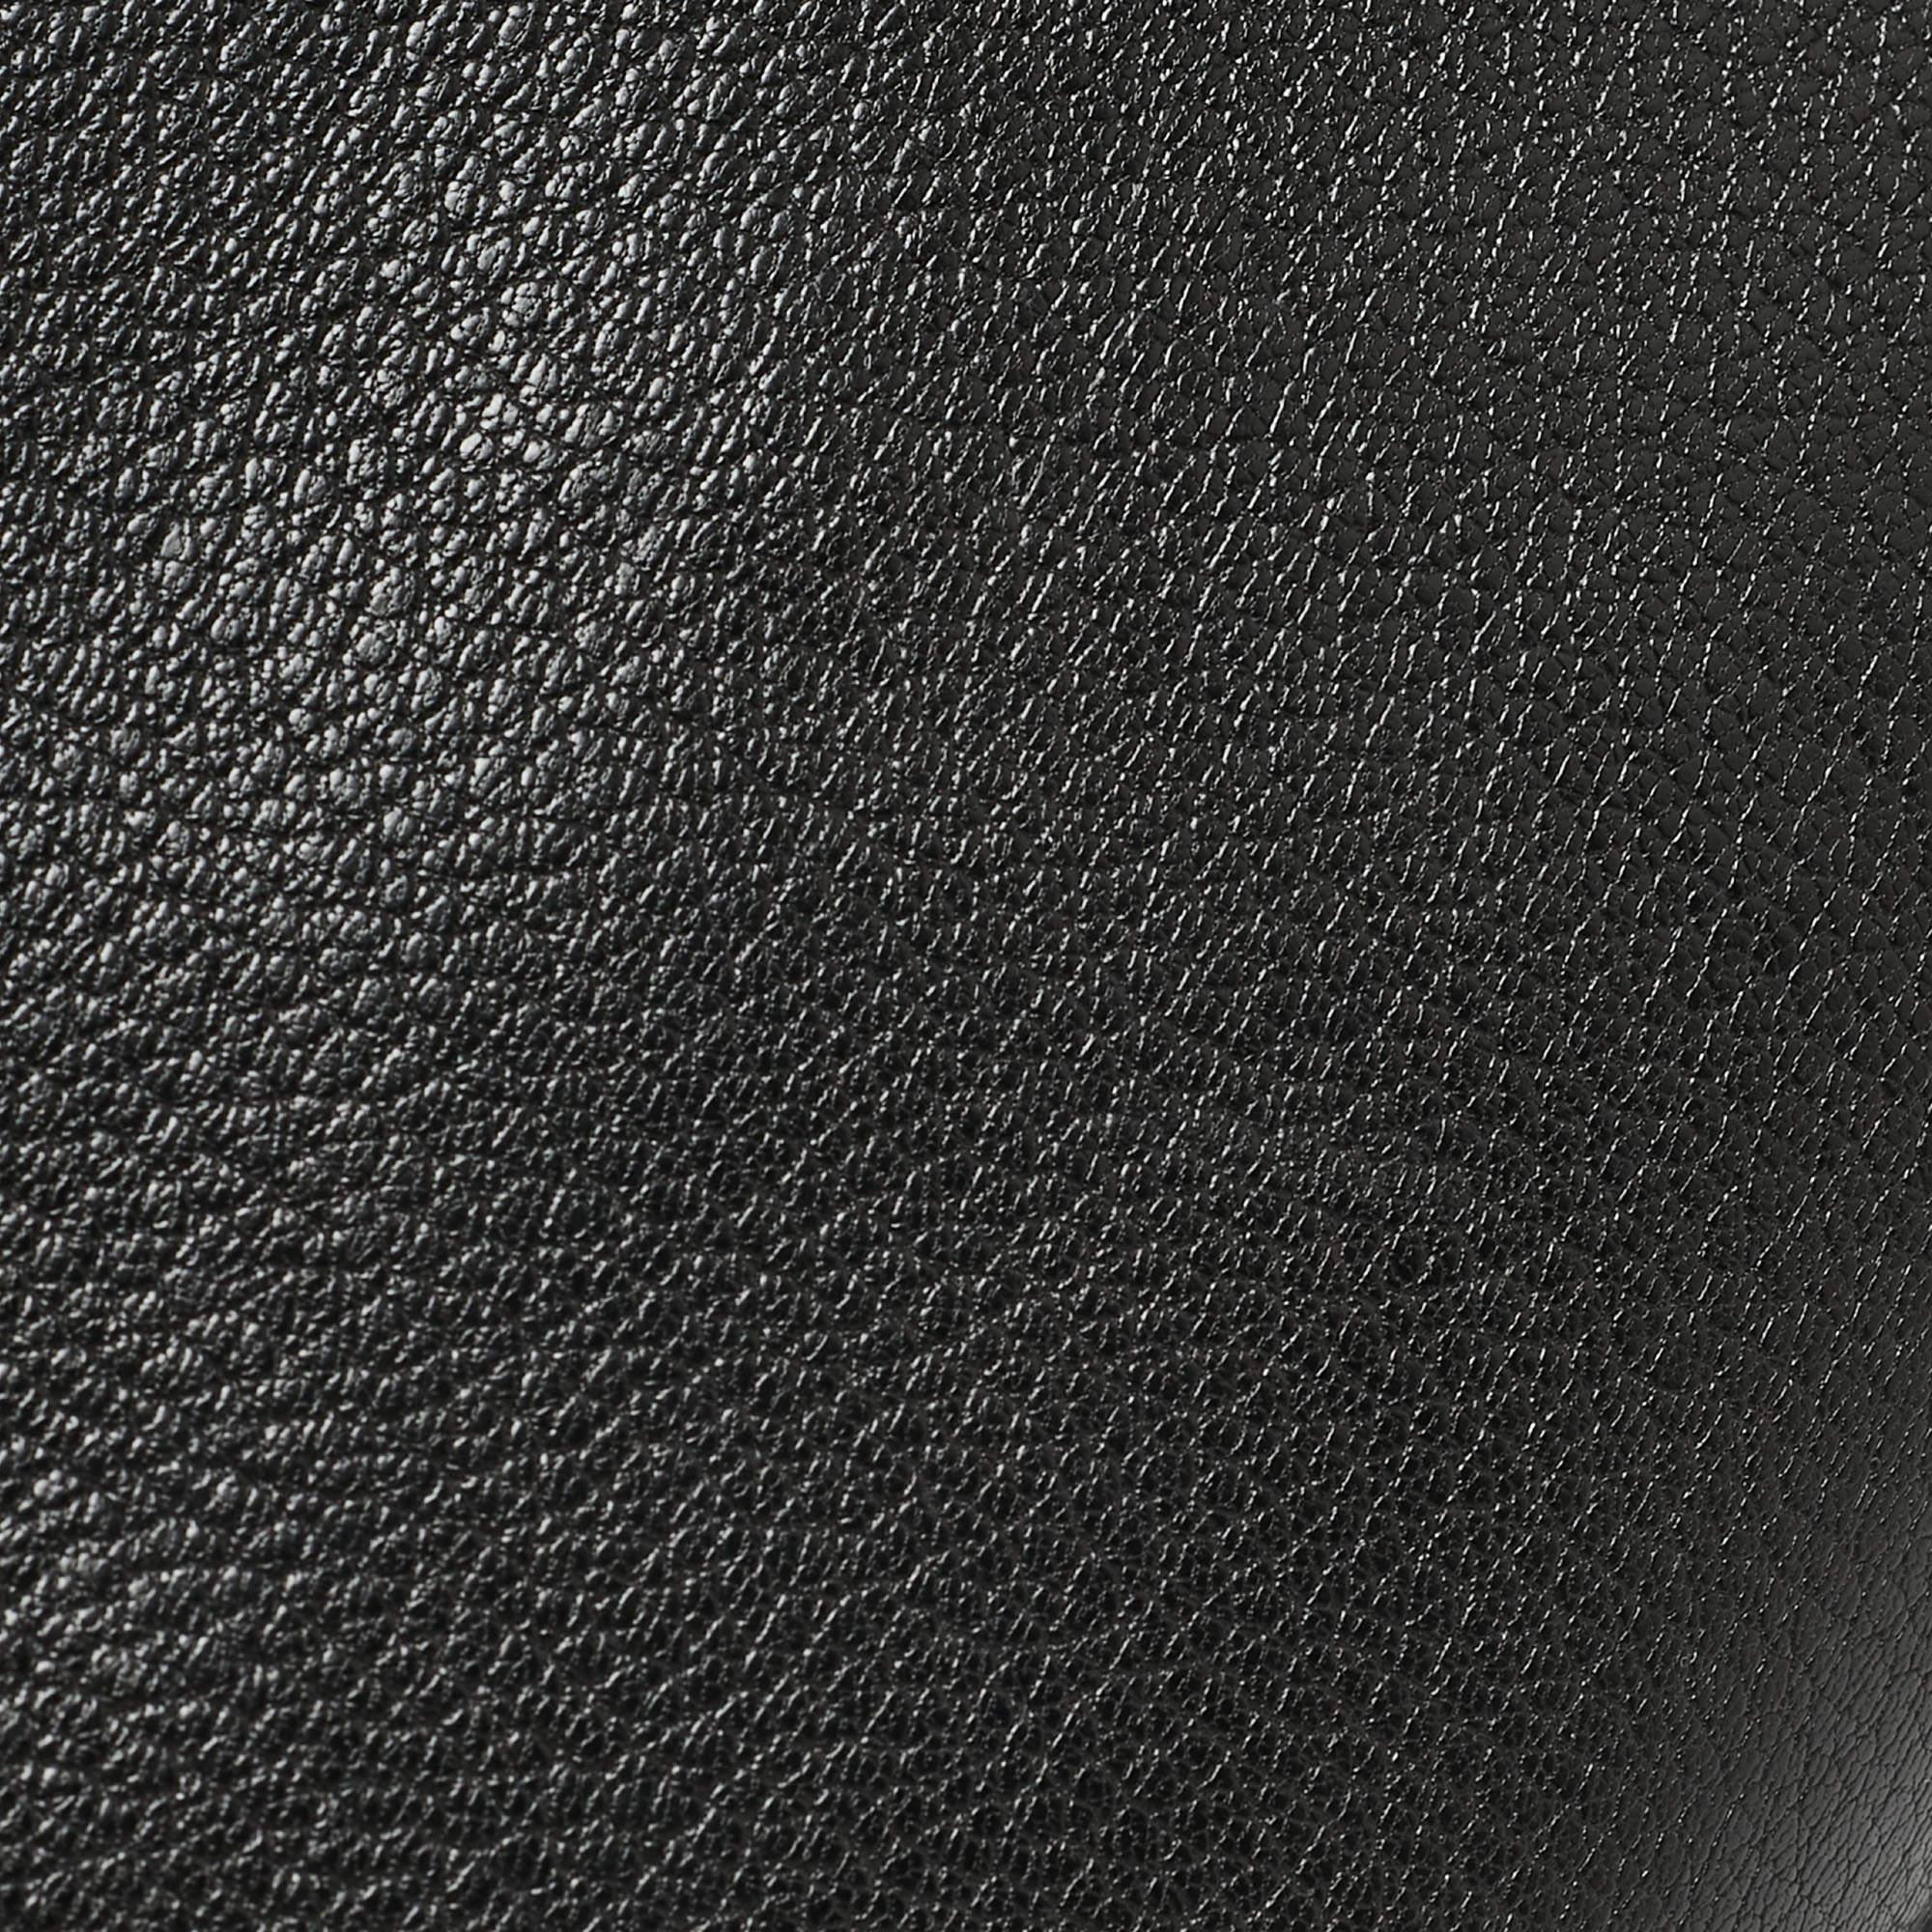 Givenchy Black Leather Medium Antigona Satchel In Good Condition For Sale In Dubai, Al Qouz 2